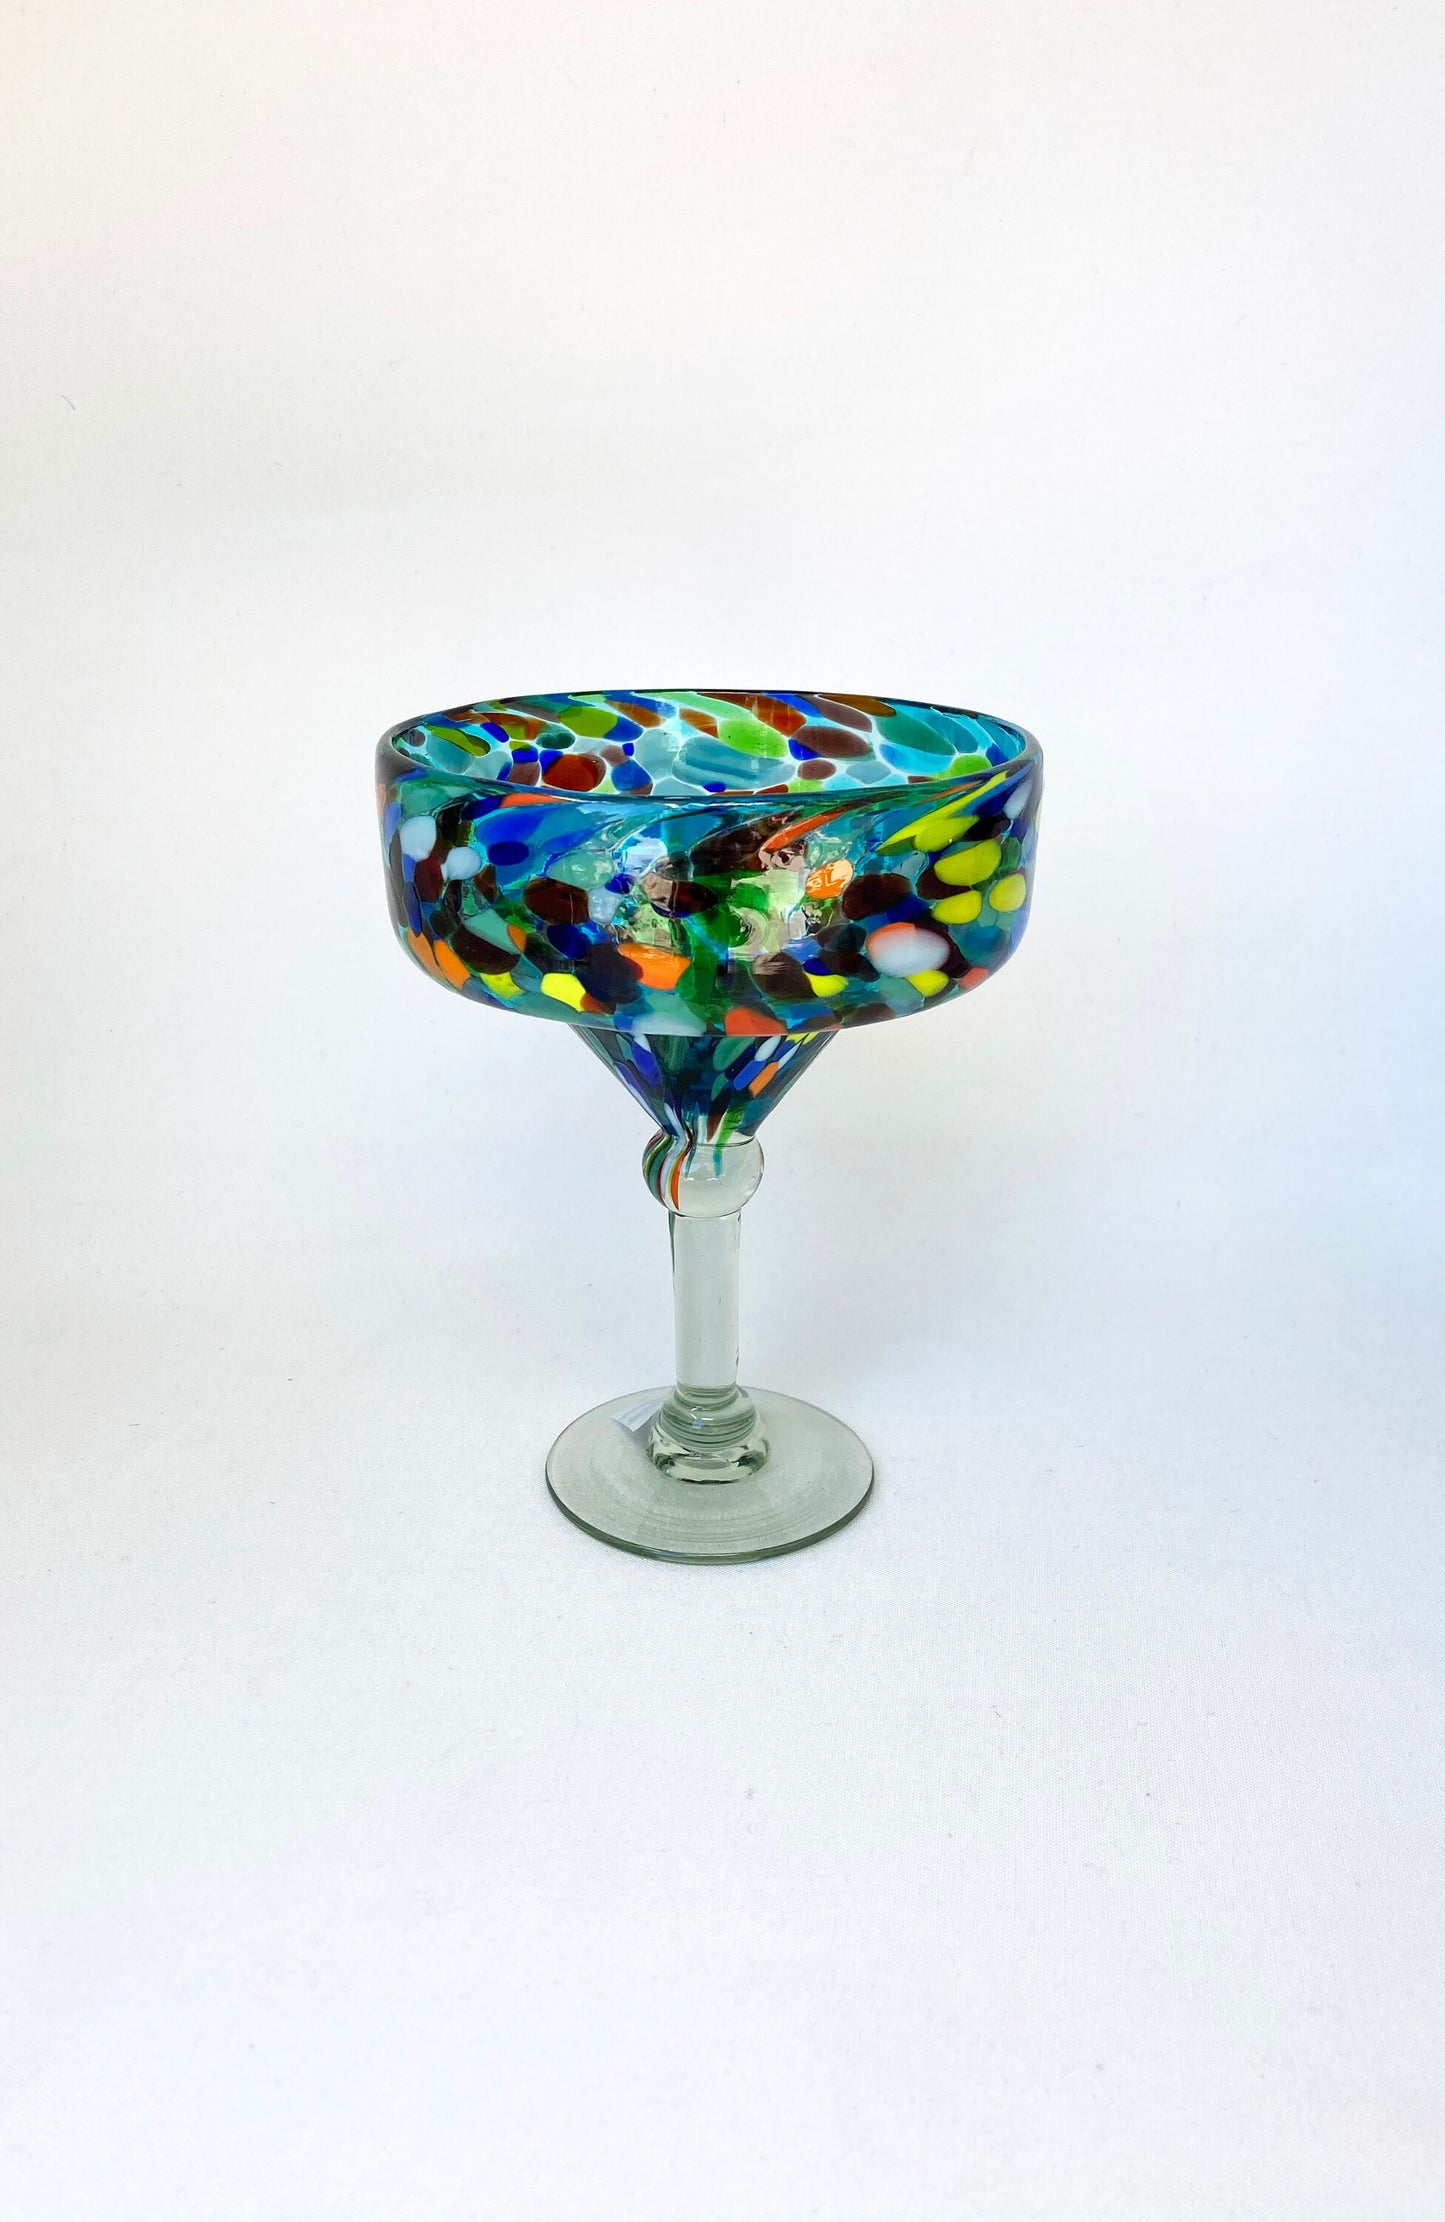 Hand Blown Margarita Glass - Turquoise Confetti